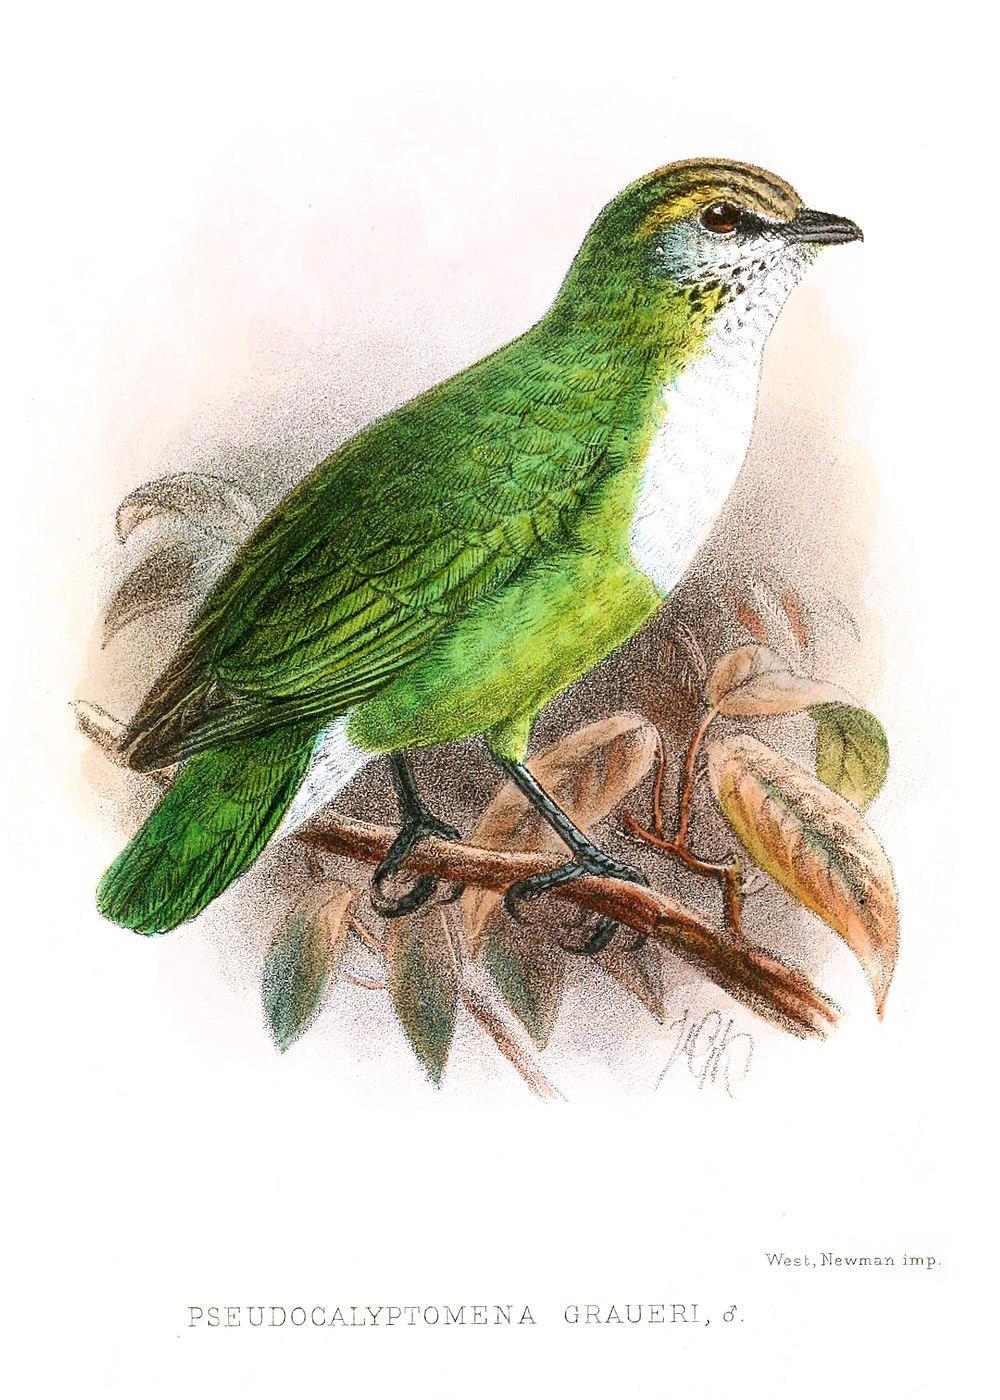 非洲绿阔嘴鸟 / Grauer\'s Broadbill / Pseudocalyptomena graueri